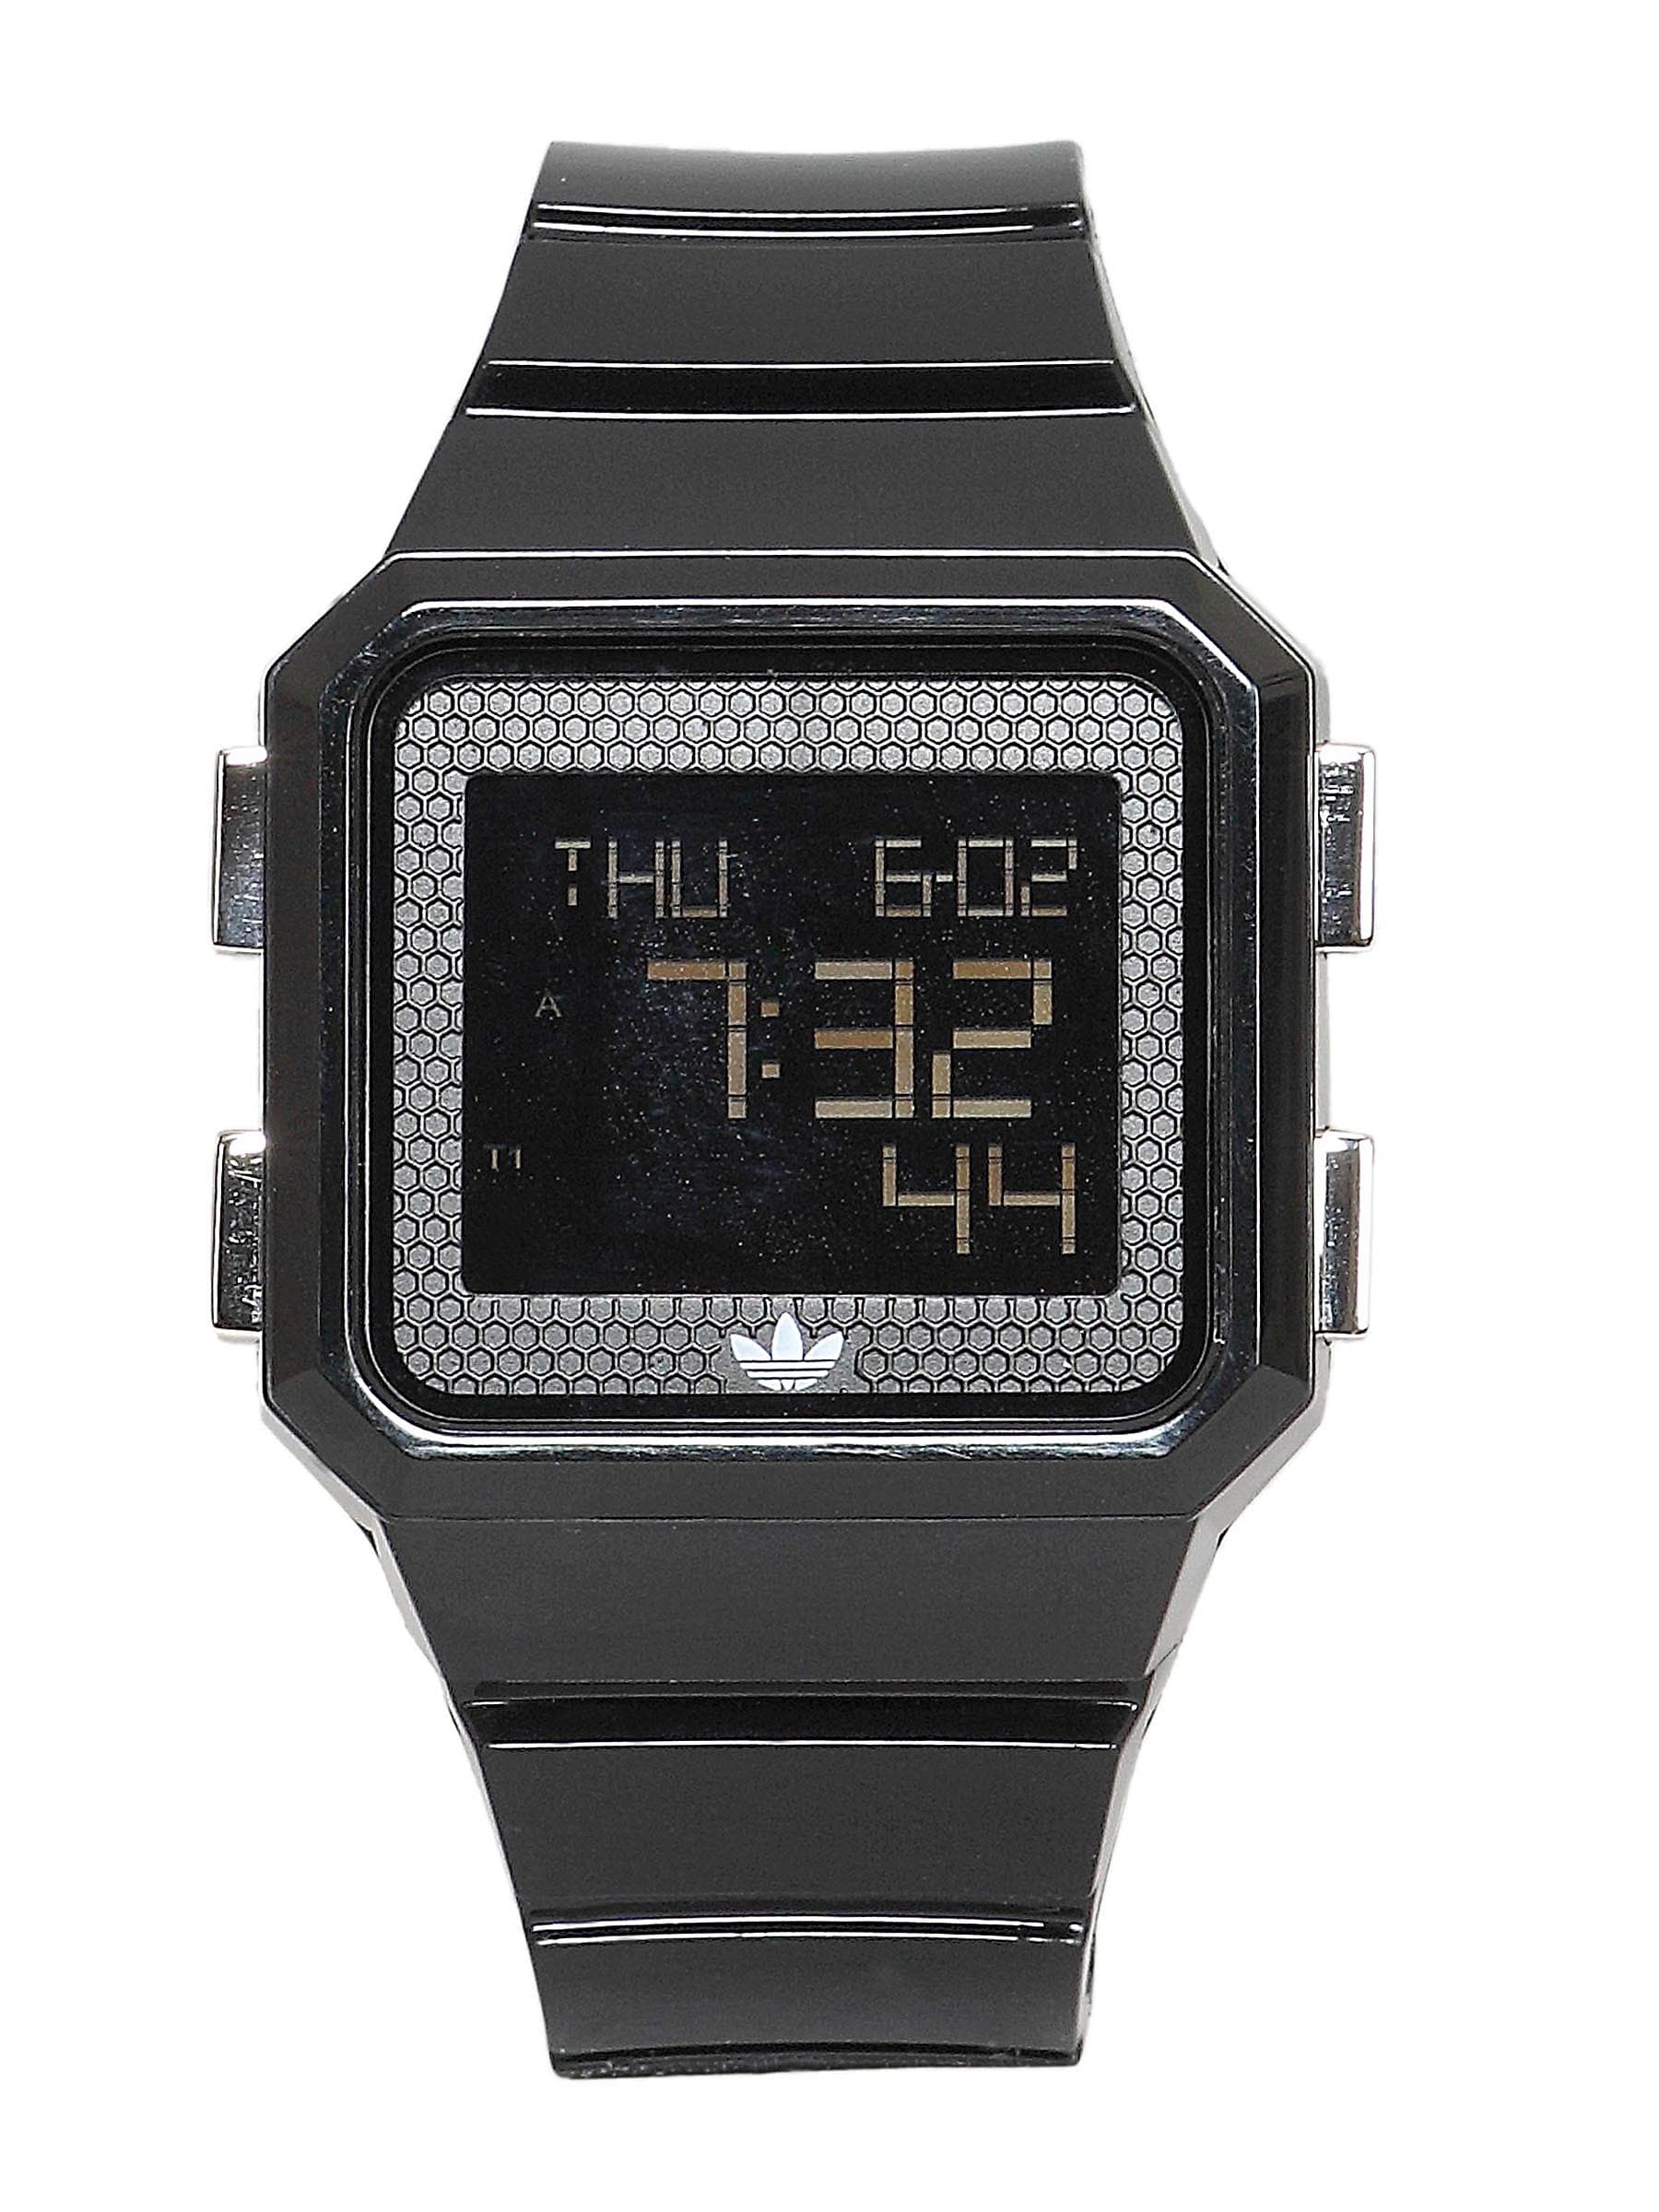 ADIDAS Unisex Peachtree Digital Black Watch